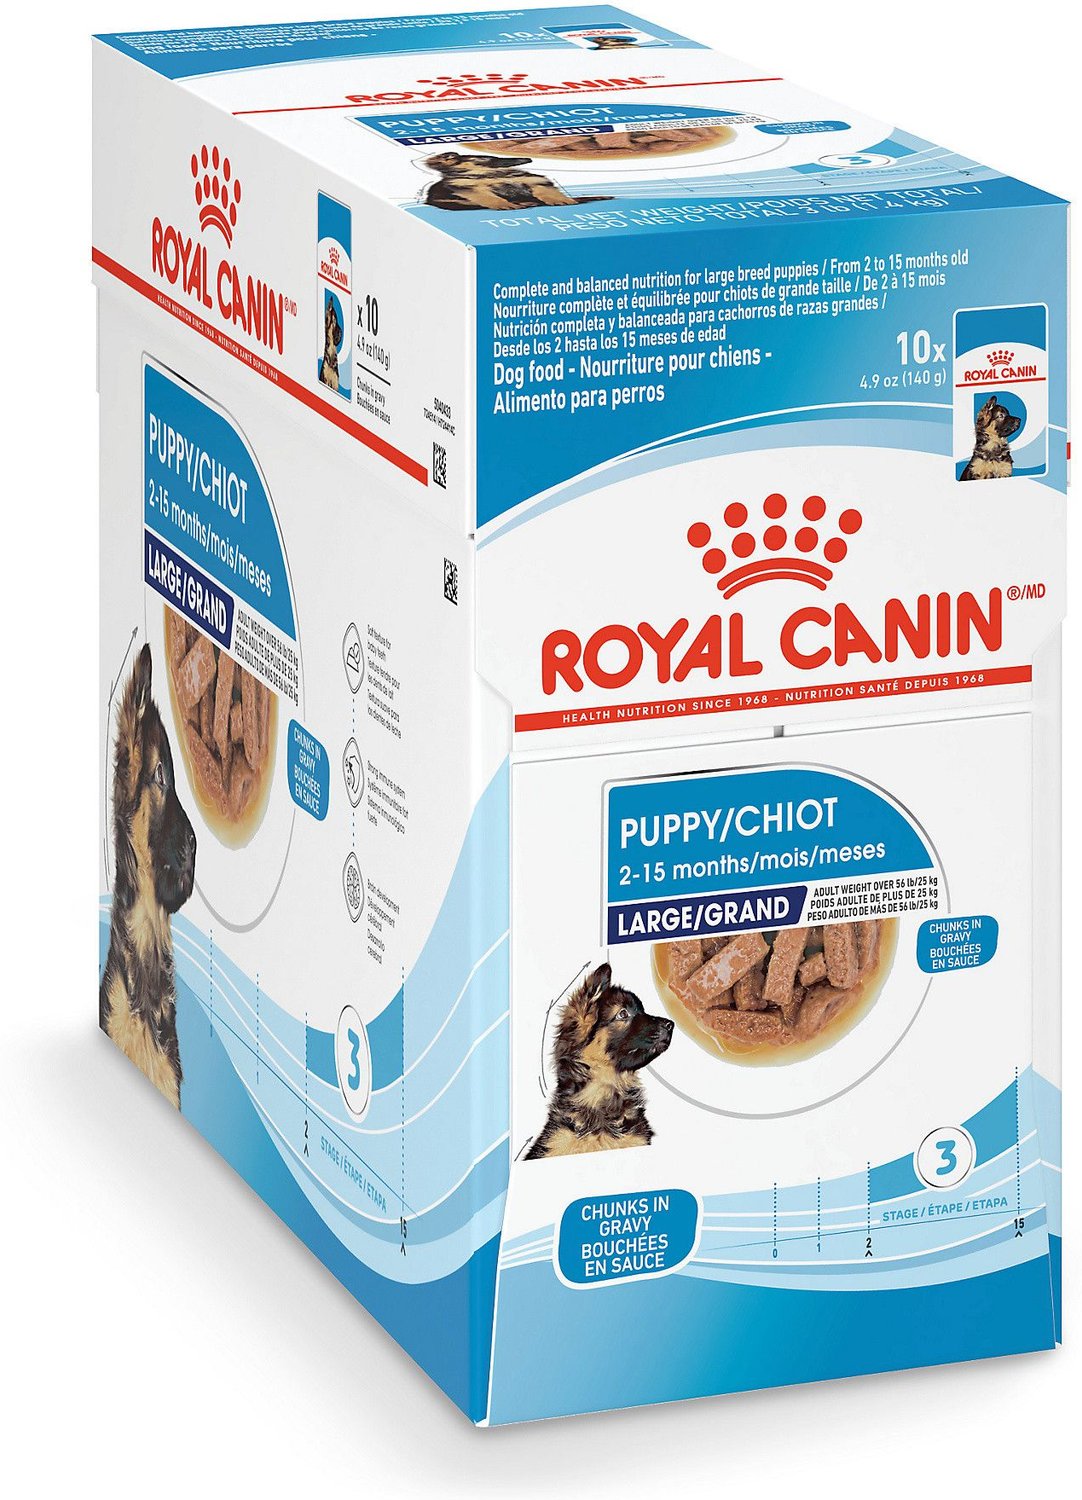 Royal canin wet food